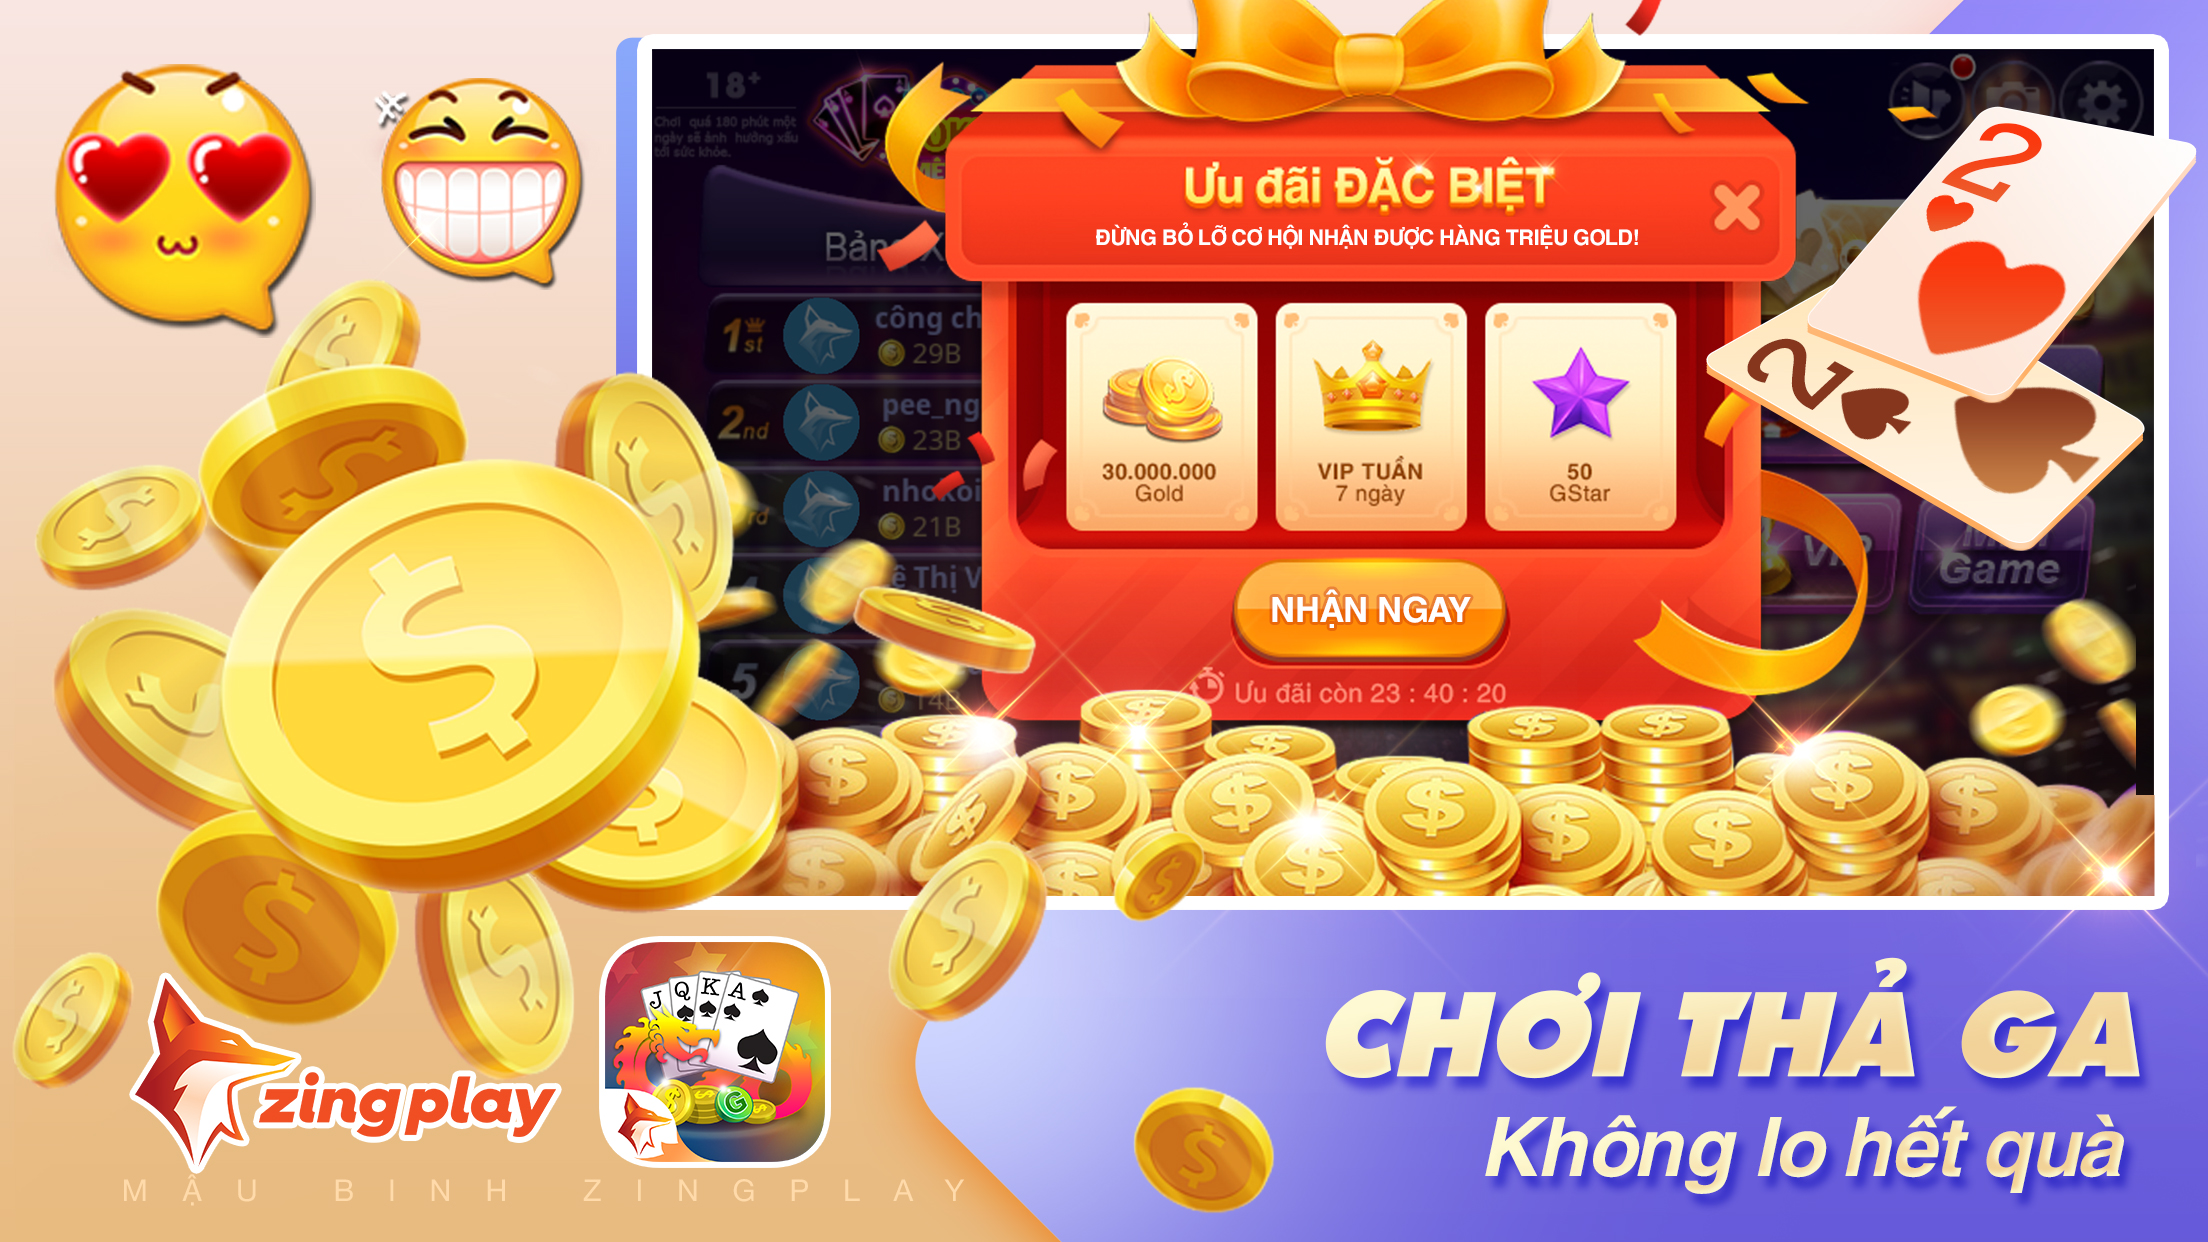 Android application Mau binh ZingPlay - Poker VN screenshort